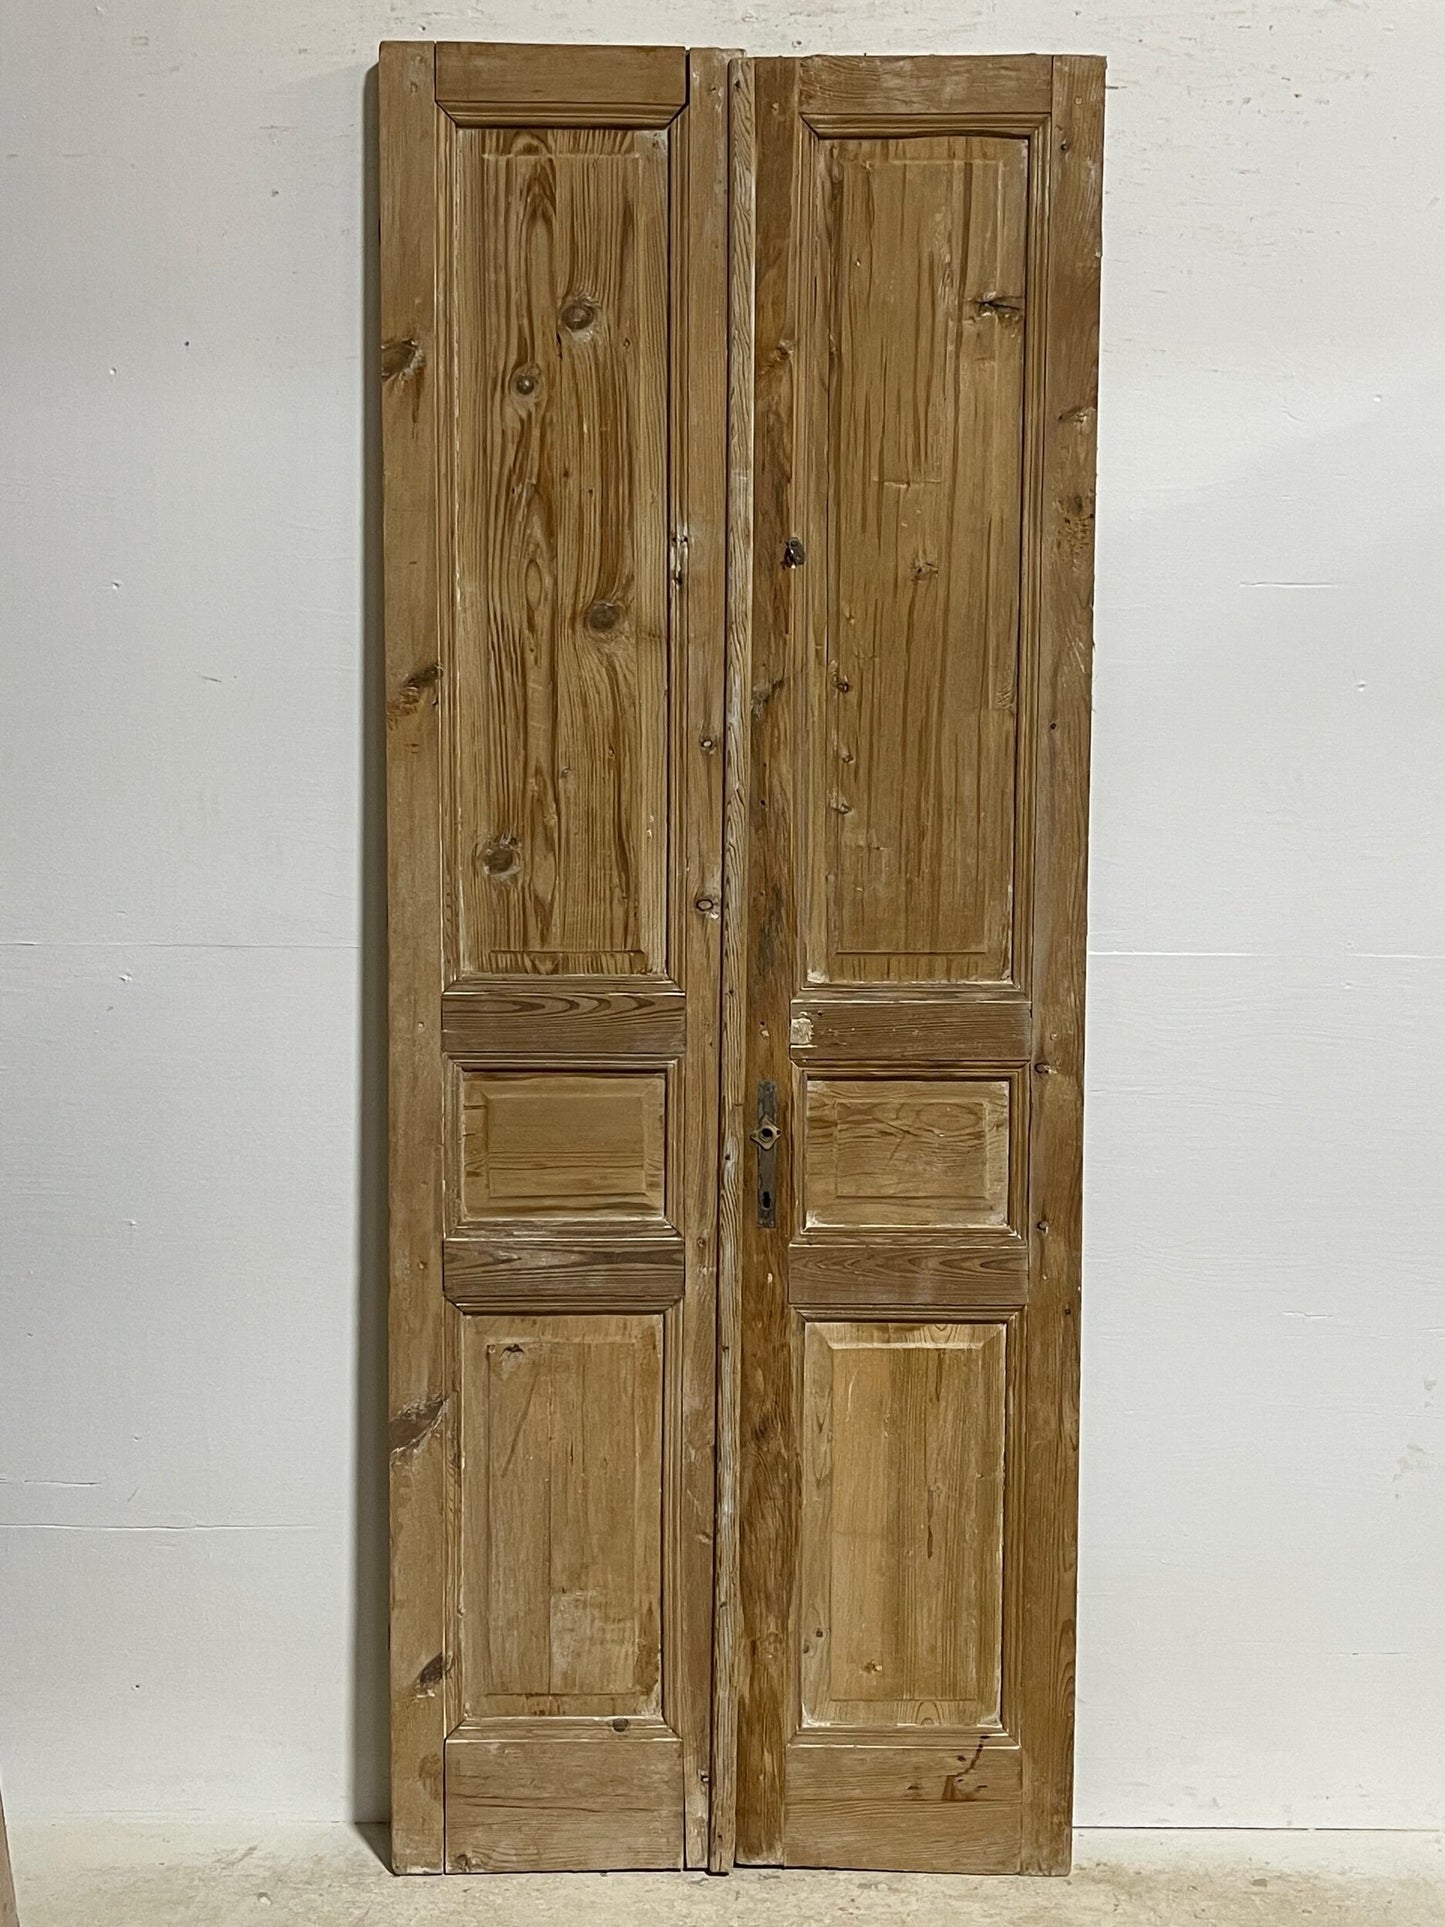 Antique French doors (92.75x36) H0199s